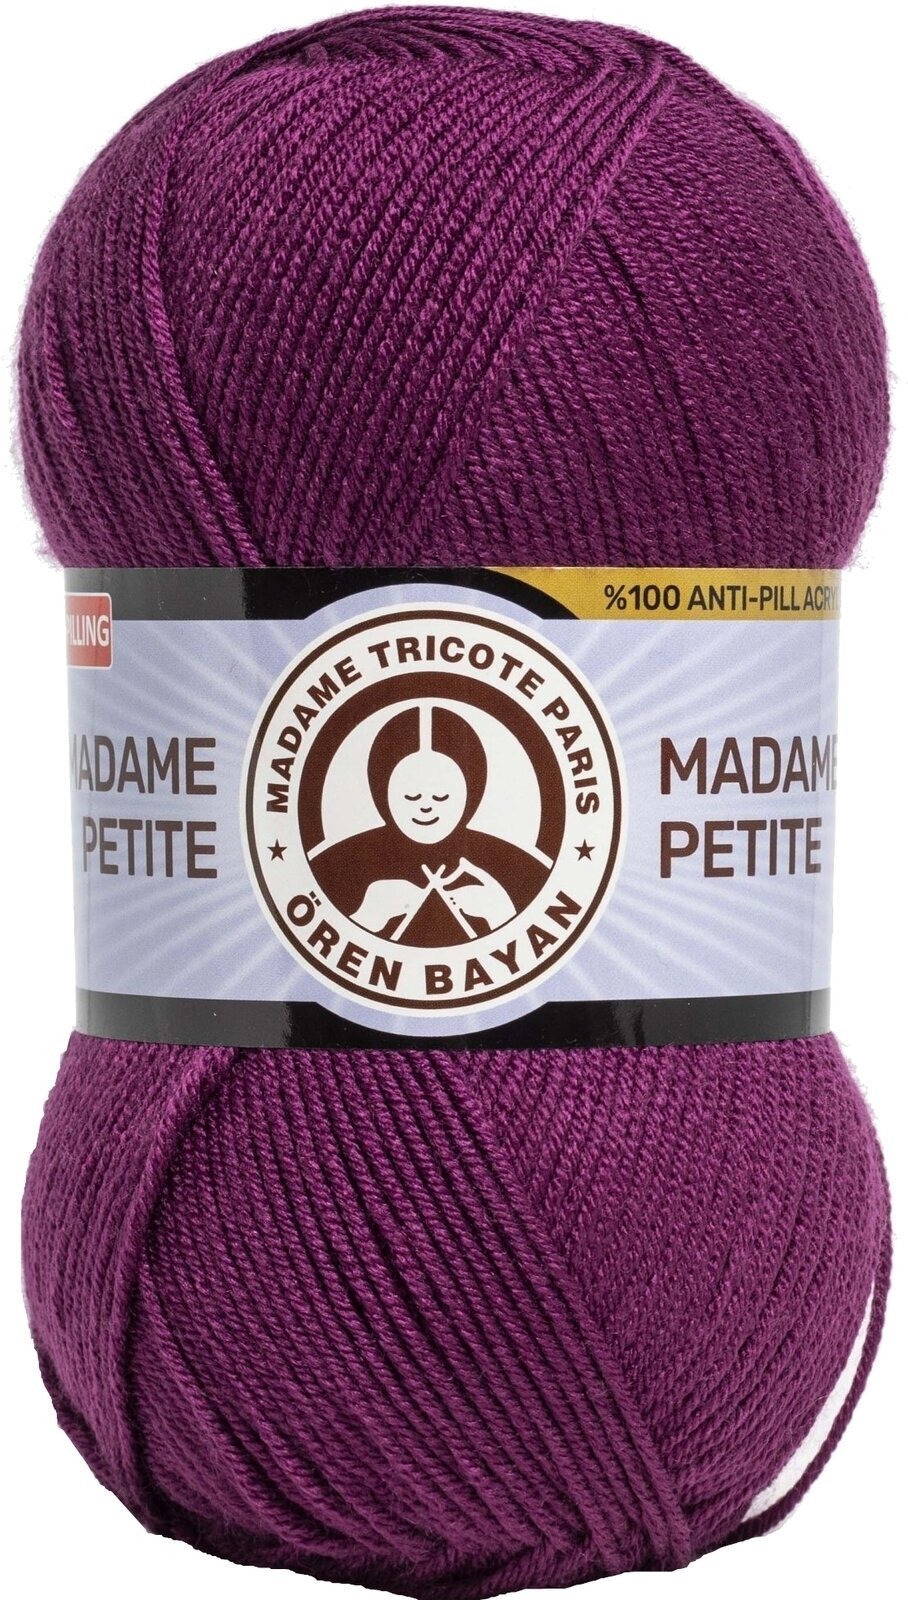 Strikkegarn Madame Tricote Paris Madame Petite 3848 52 Strikkegarn